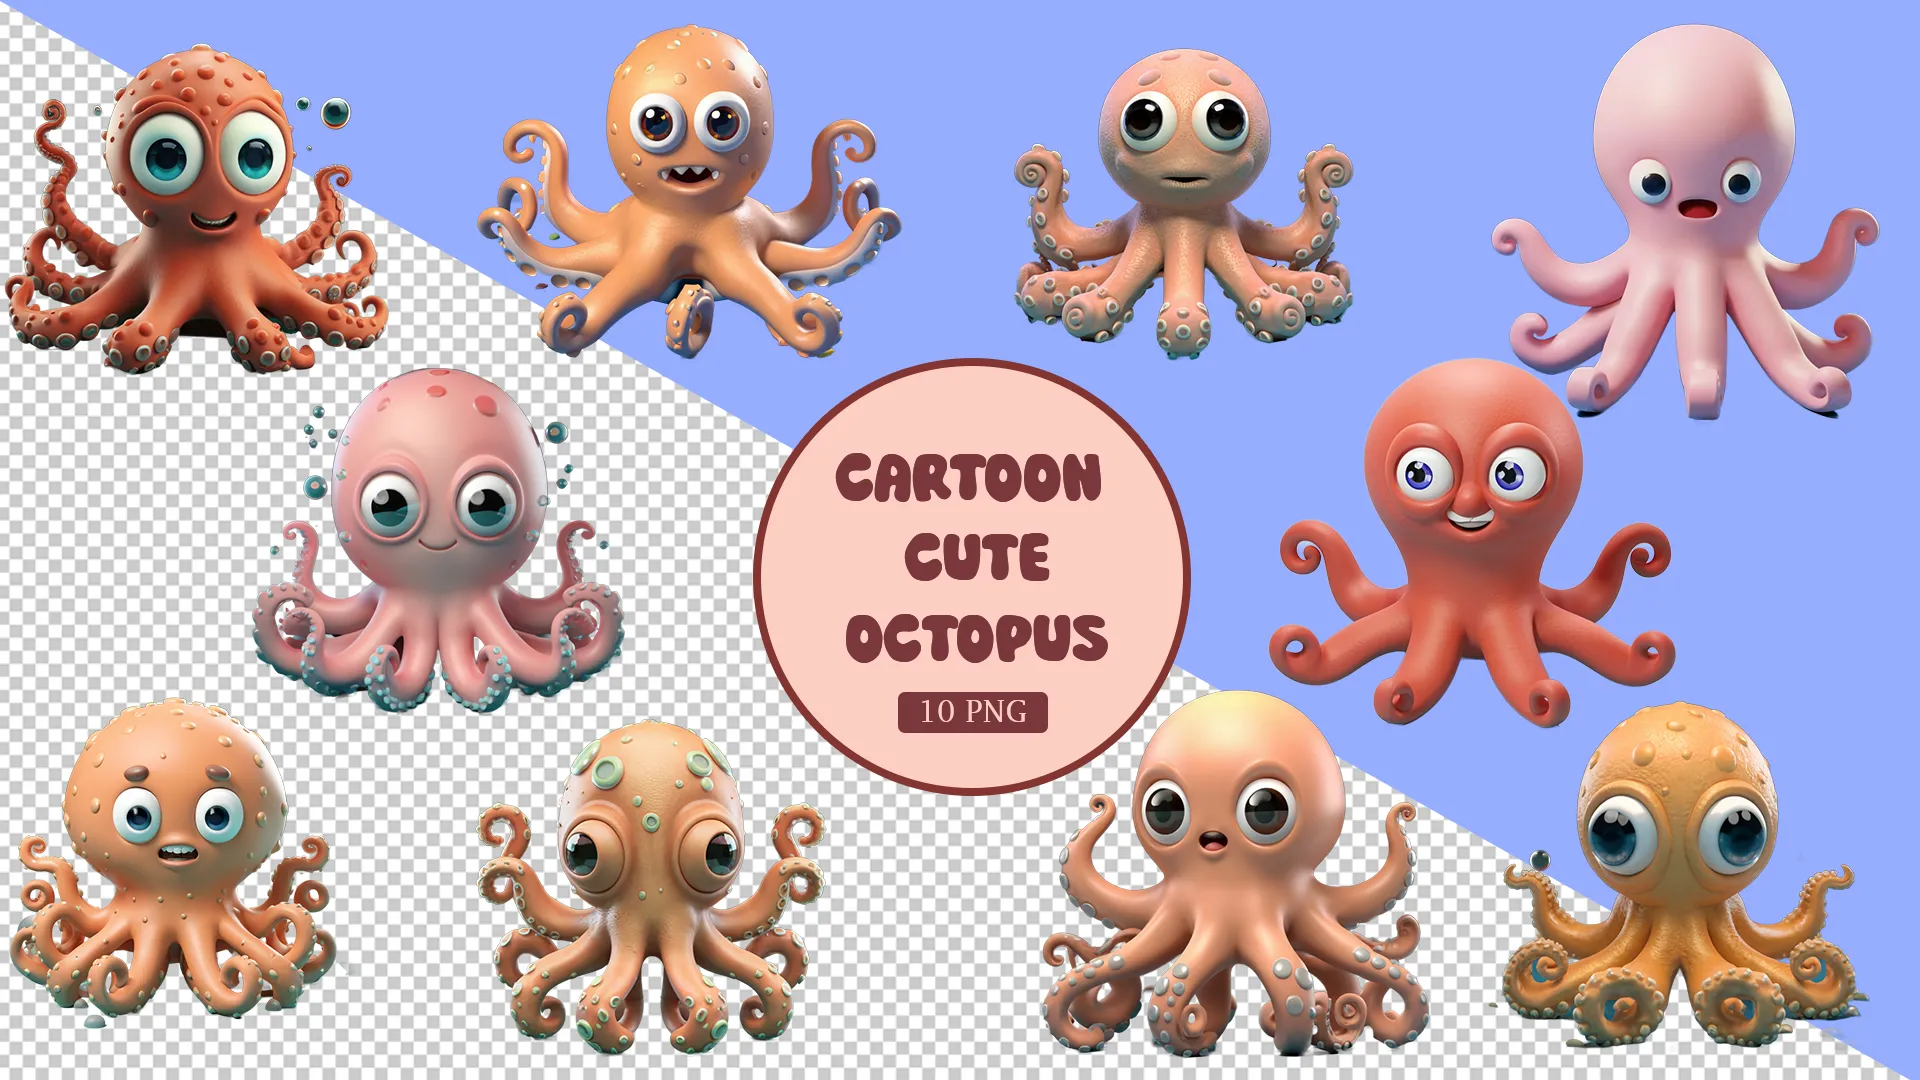 Delightful 3D Cartoon Octopuses Pack image